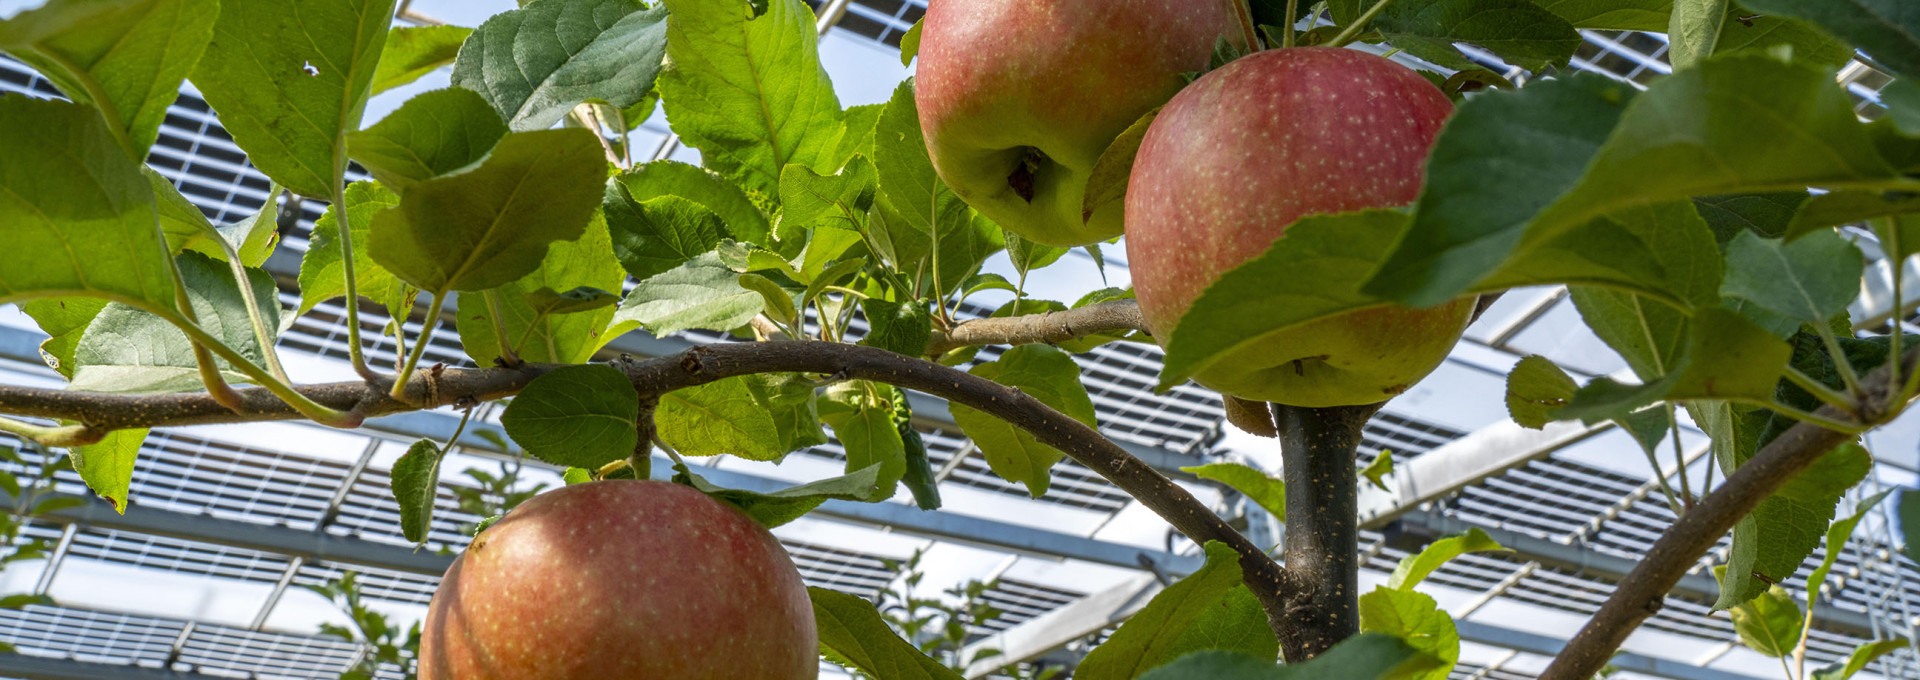 Apfelbäume im Schatten unter Photovoltaikmodulen